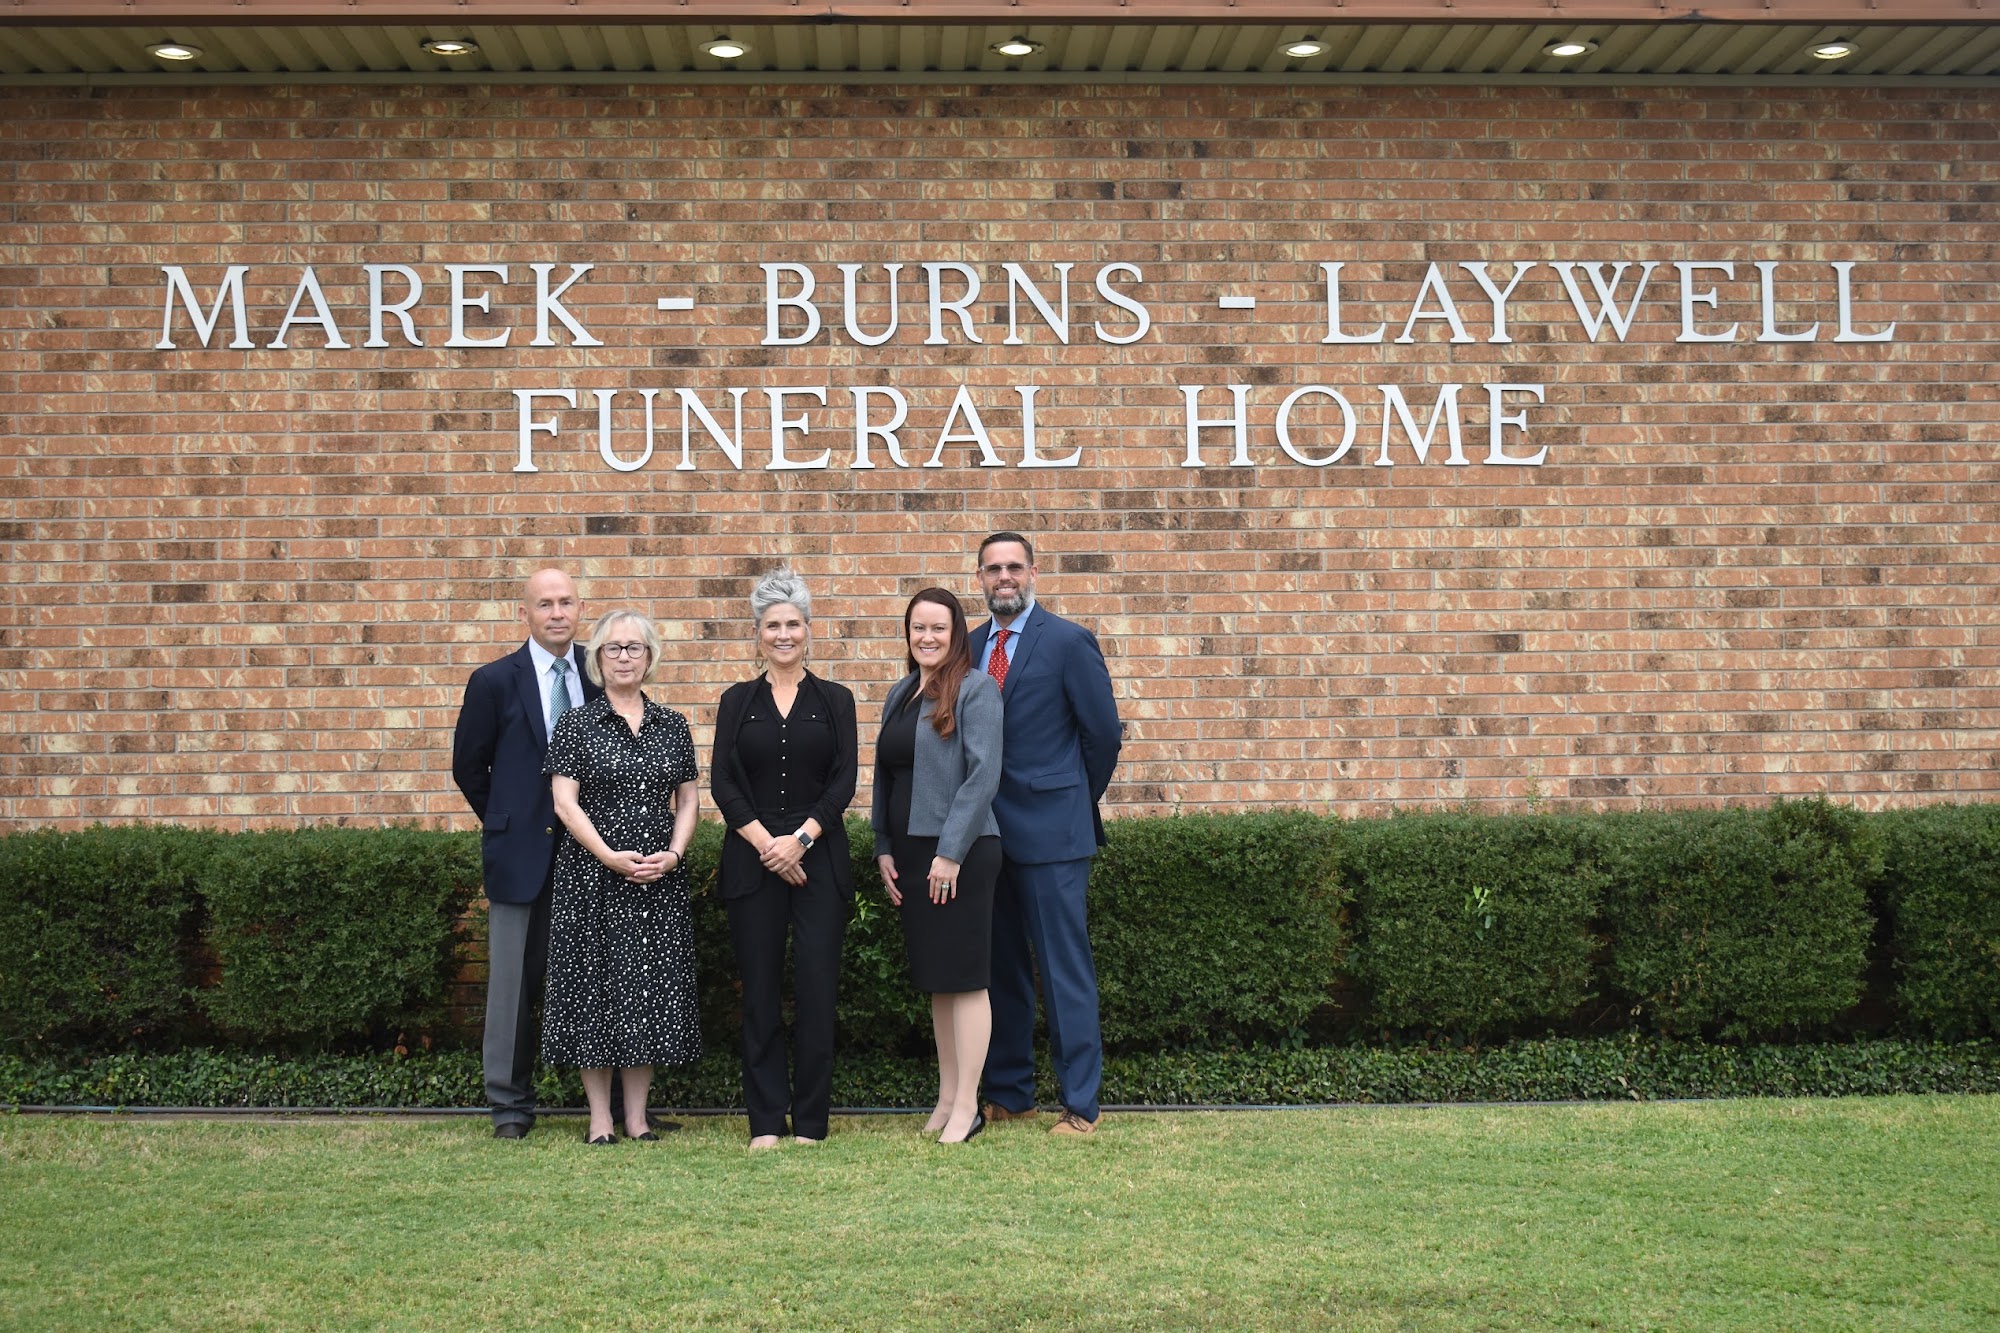 Marek-Burns-Laywell Funeral Home